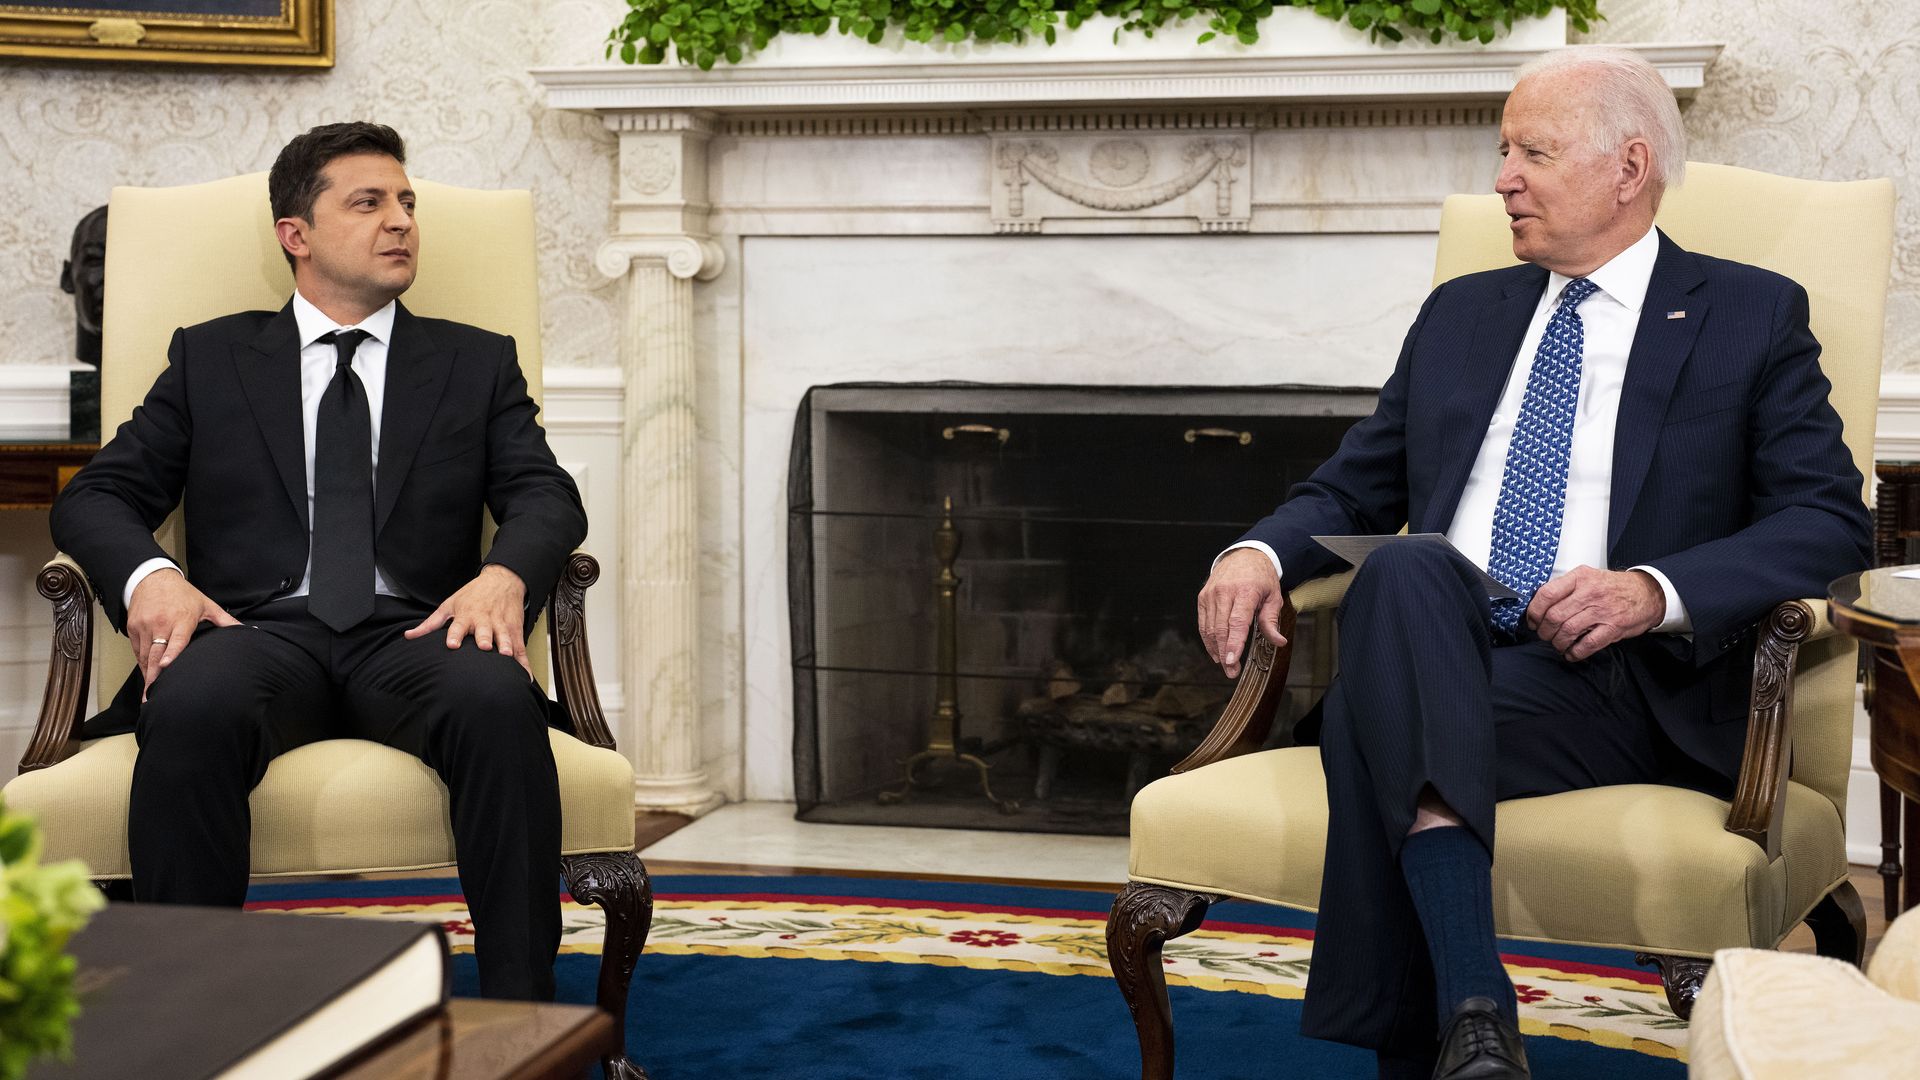 Ukrainian President Volodymyr Zelensky sits next to President Biden during his visit to the White House in September 2021.